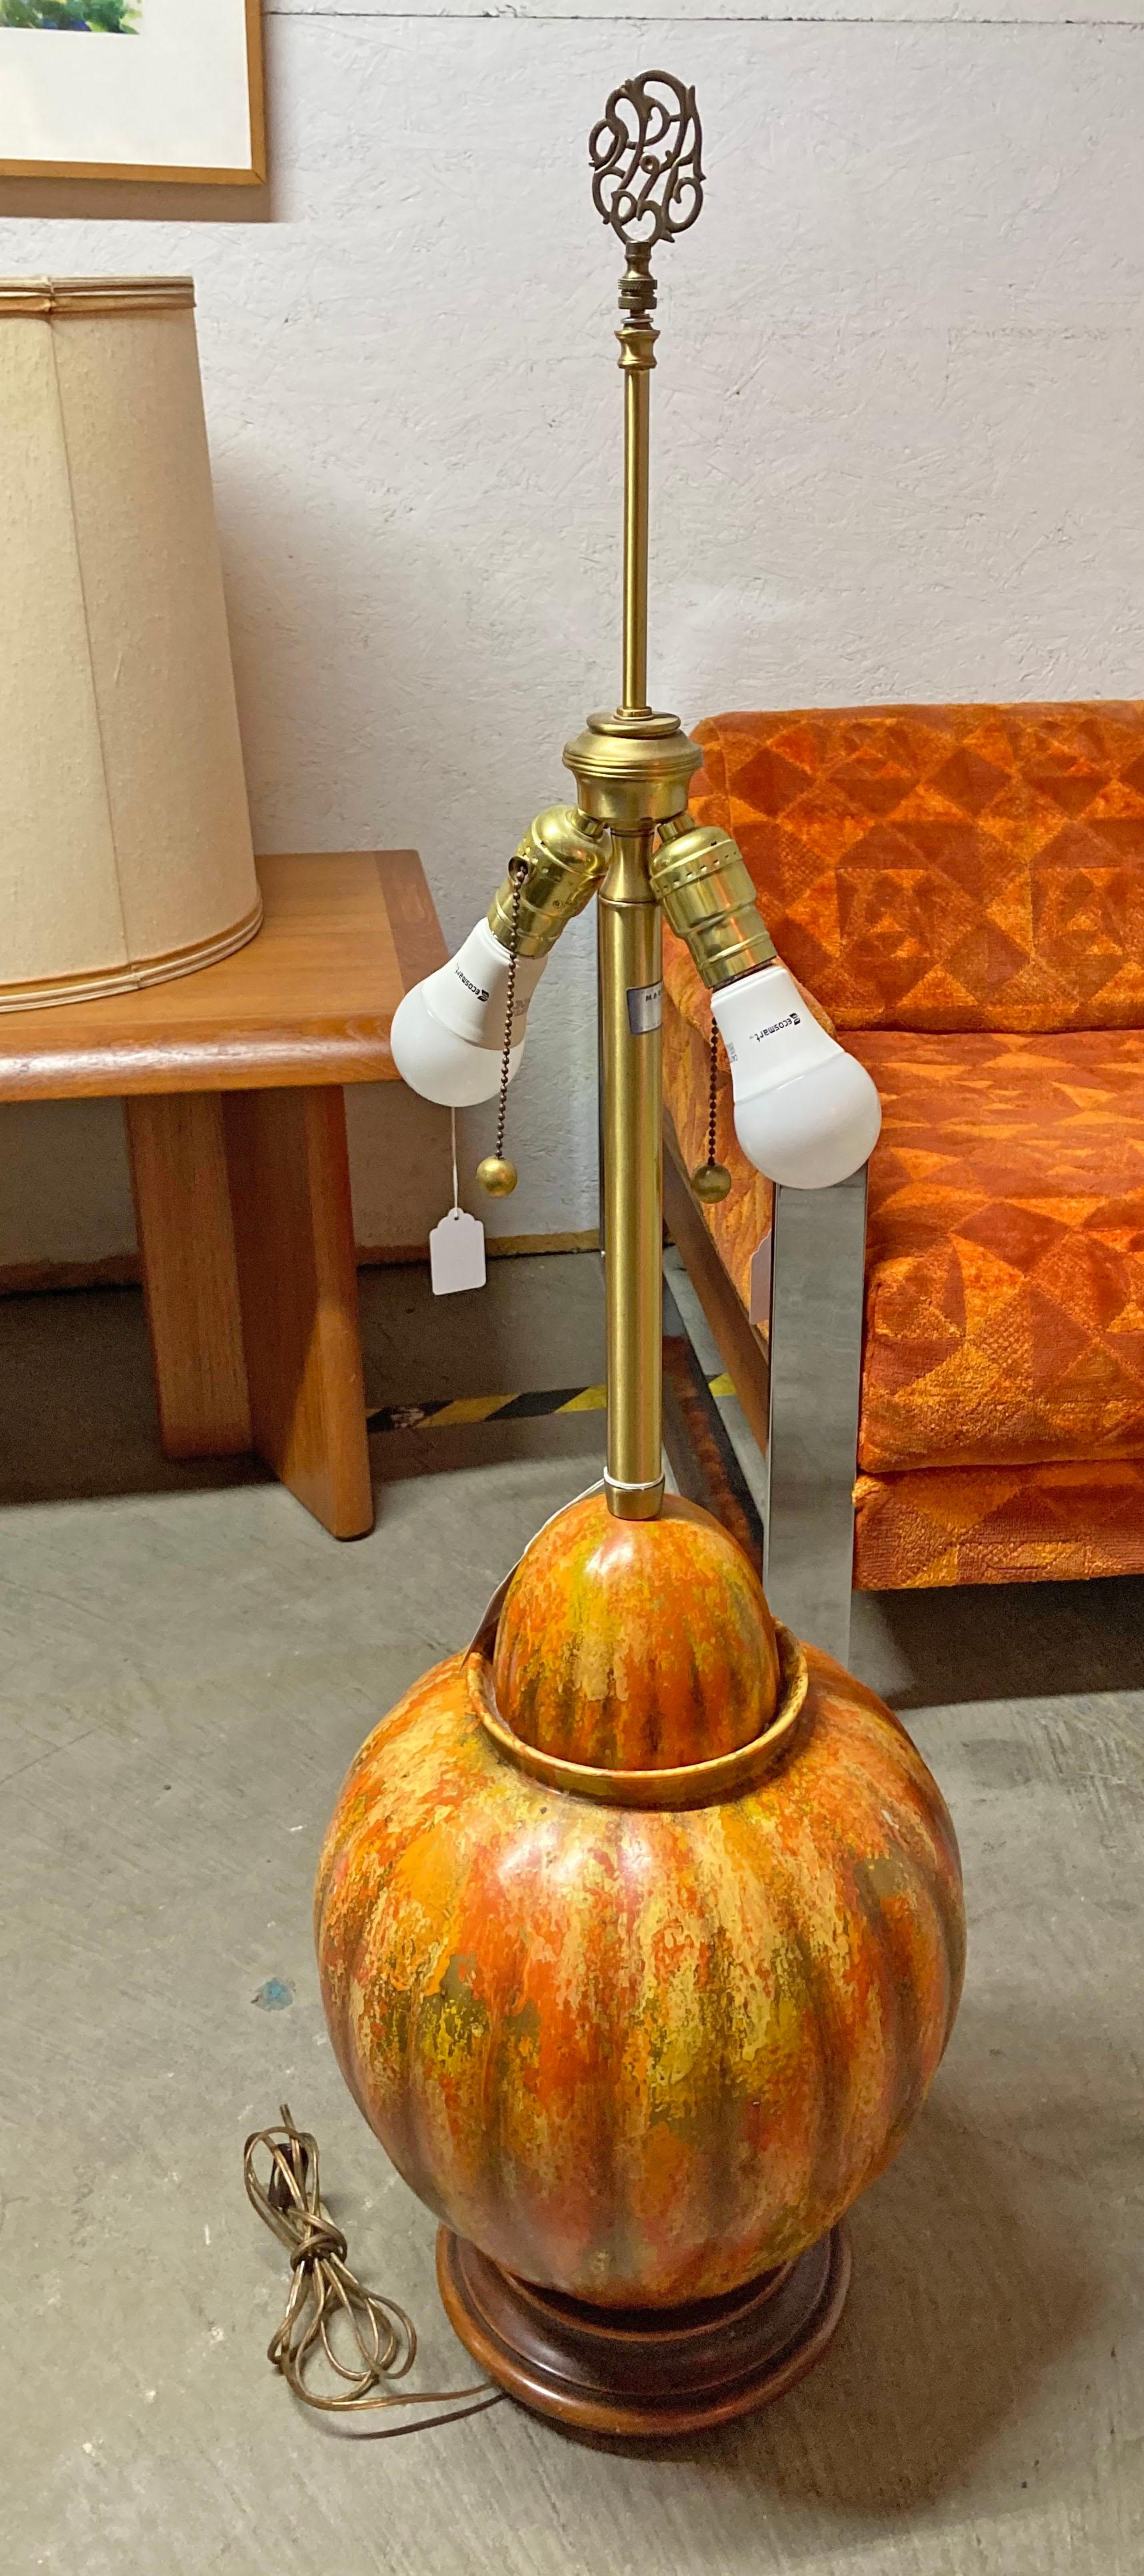 Inconnu Modernity The Moderns Marbro Lamp Co. Lampe de table en céramique orange peinte en vente